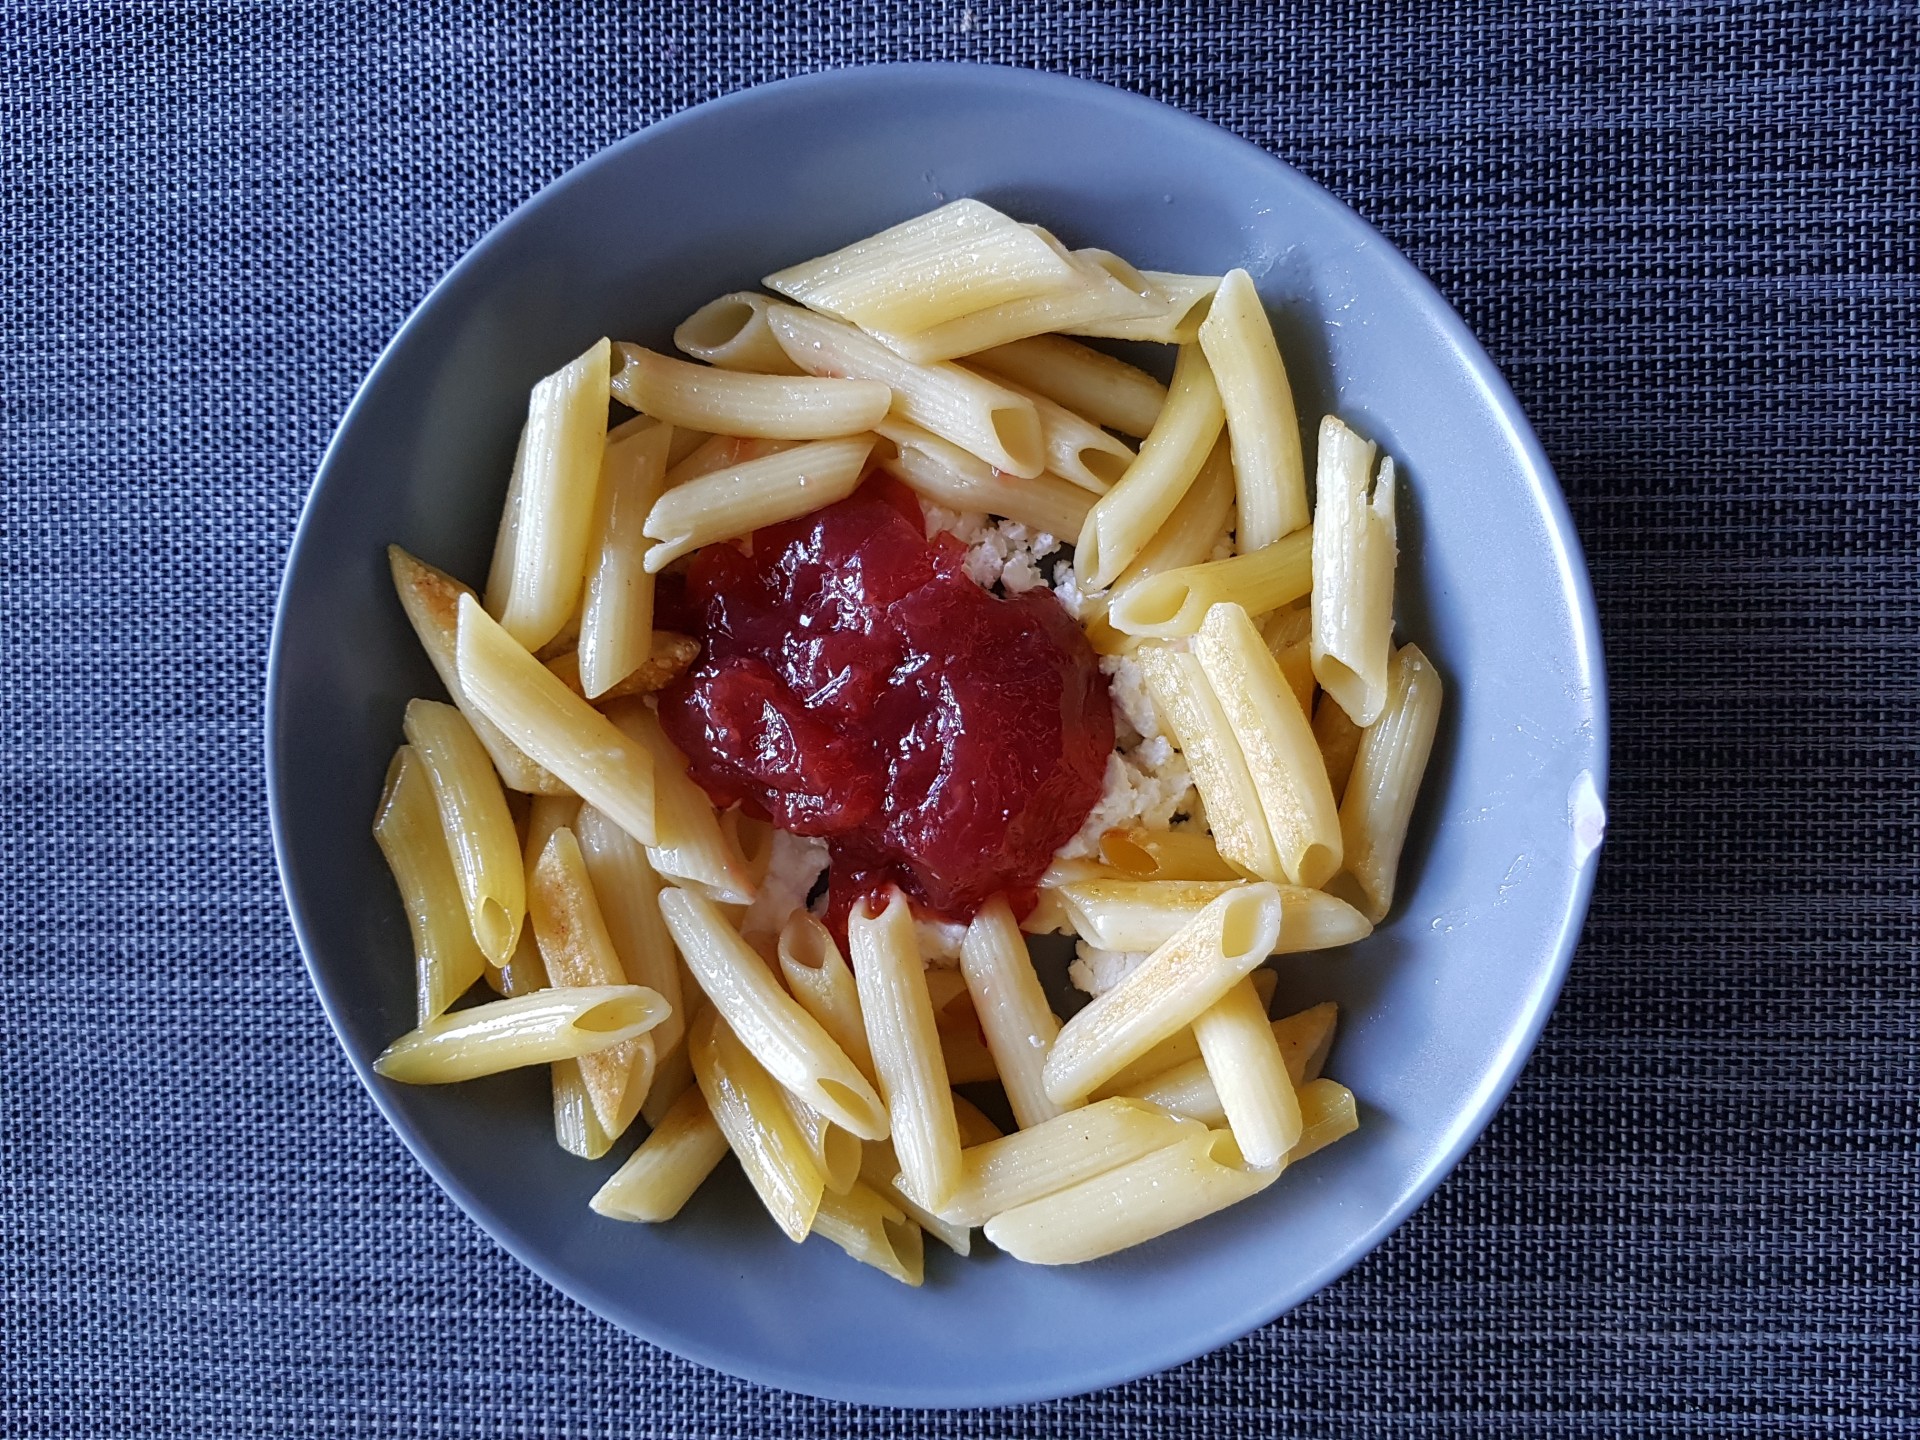 Pasta + white cheese + strawberry jam = My meal ❤